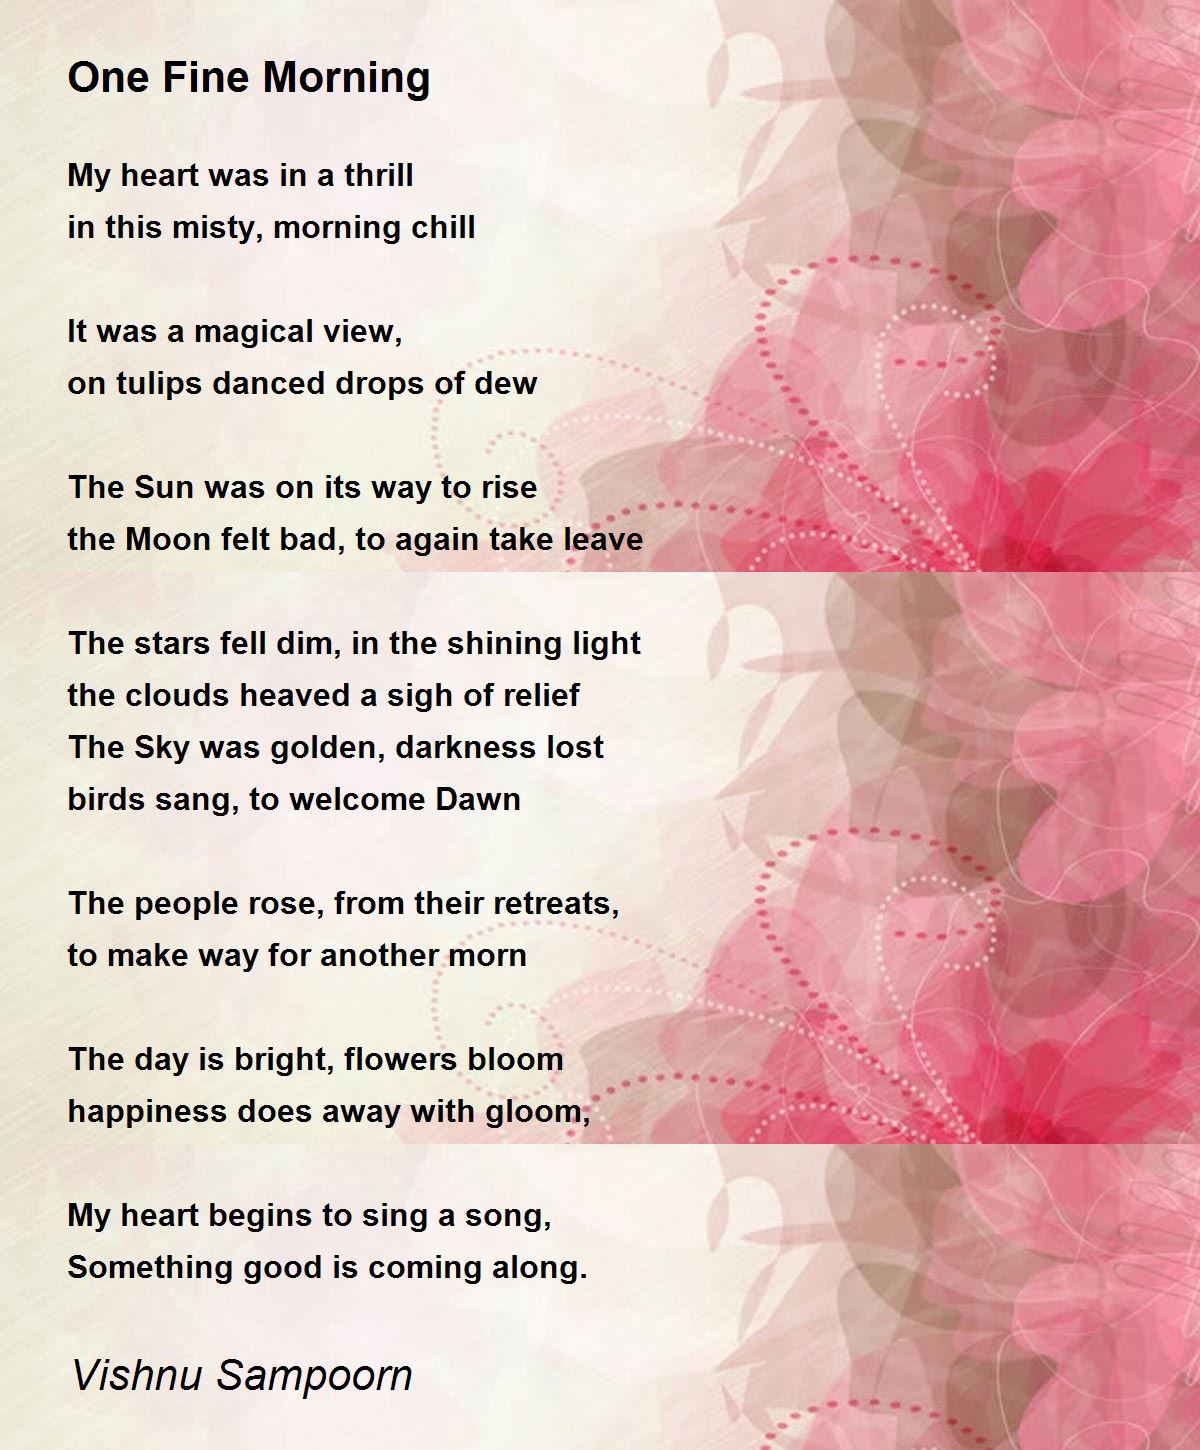 One Fine Morning - One Fine Morning Poem by Vishnu Sampoorn